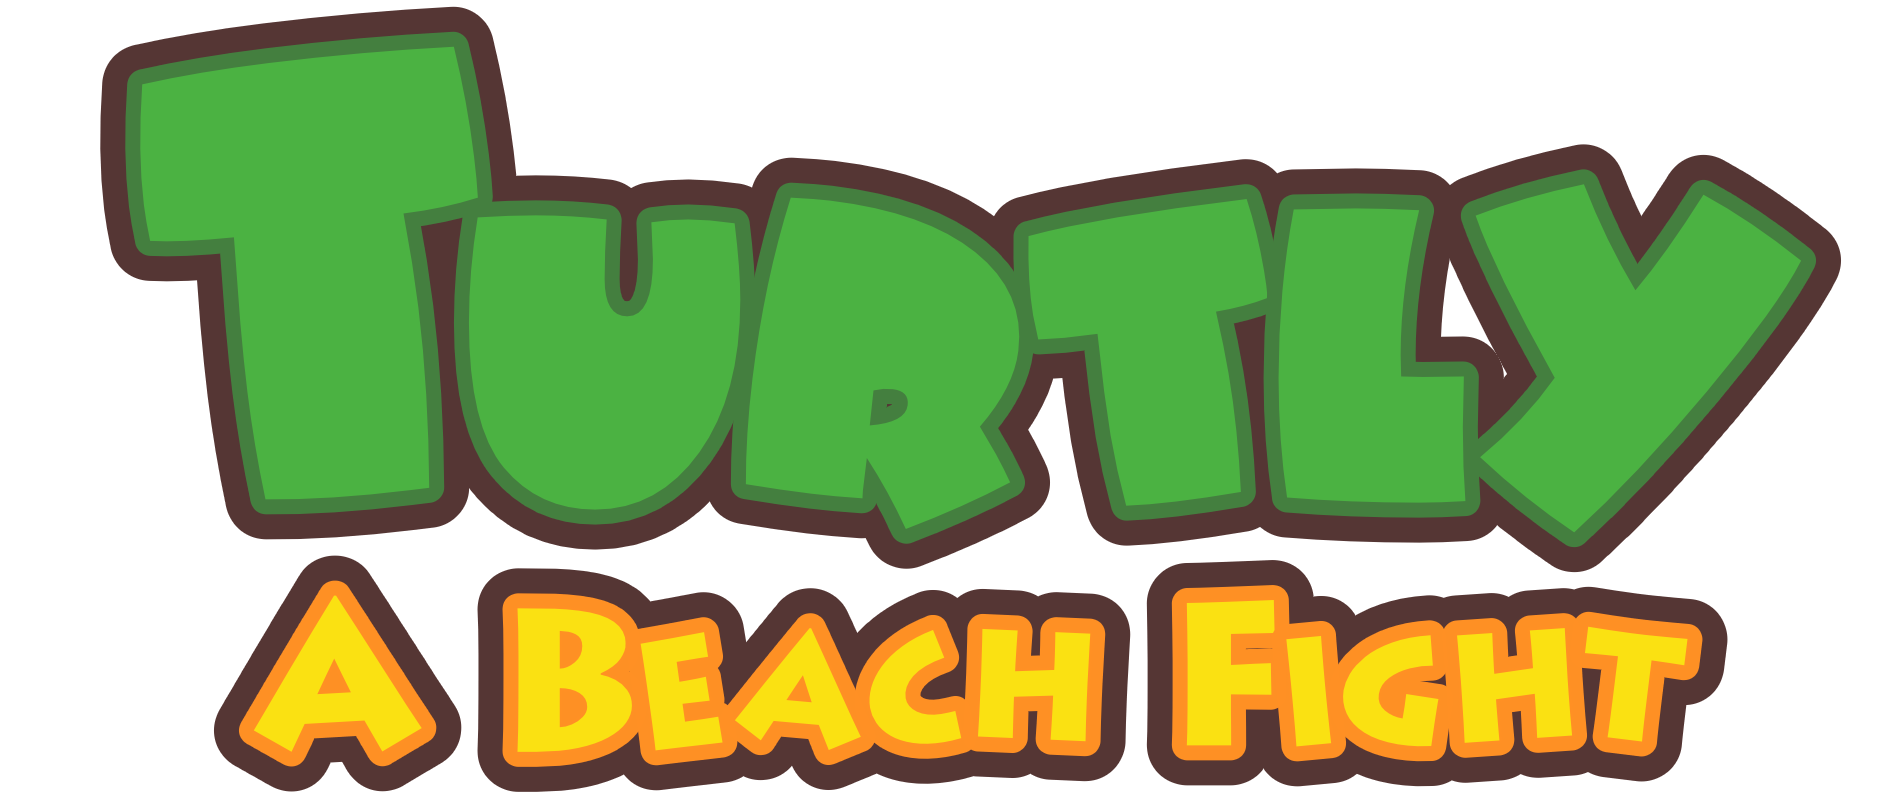 Logo - Turtly - A Beach Fight! - Indie Platform Game